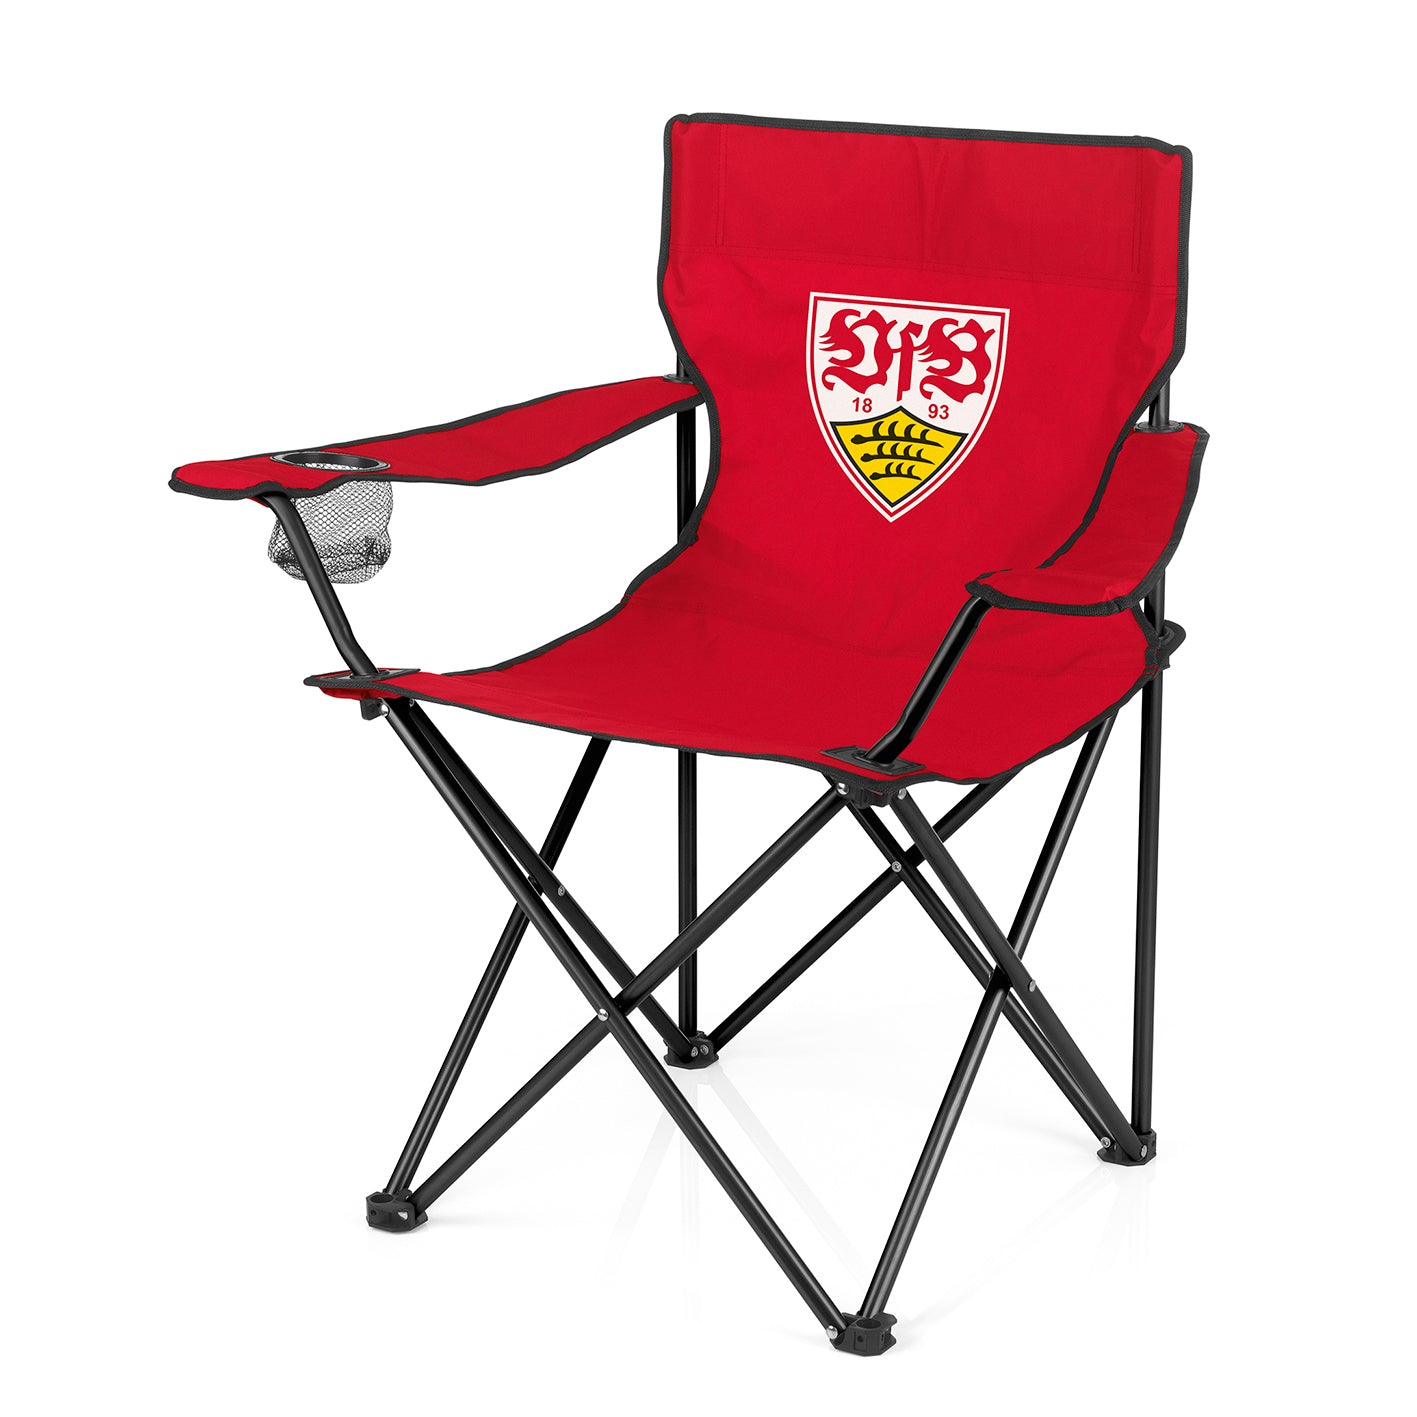 Campingstuhl faltbar - 80x50 cm - rot mit Logo von VfB Stuttgart